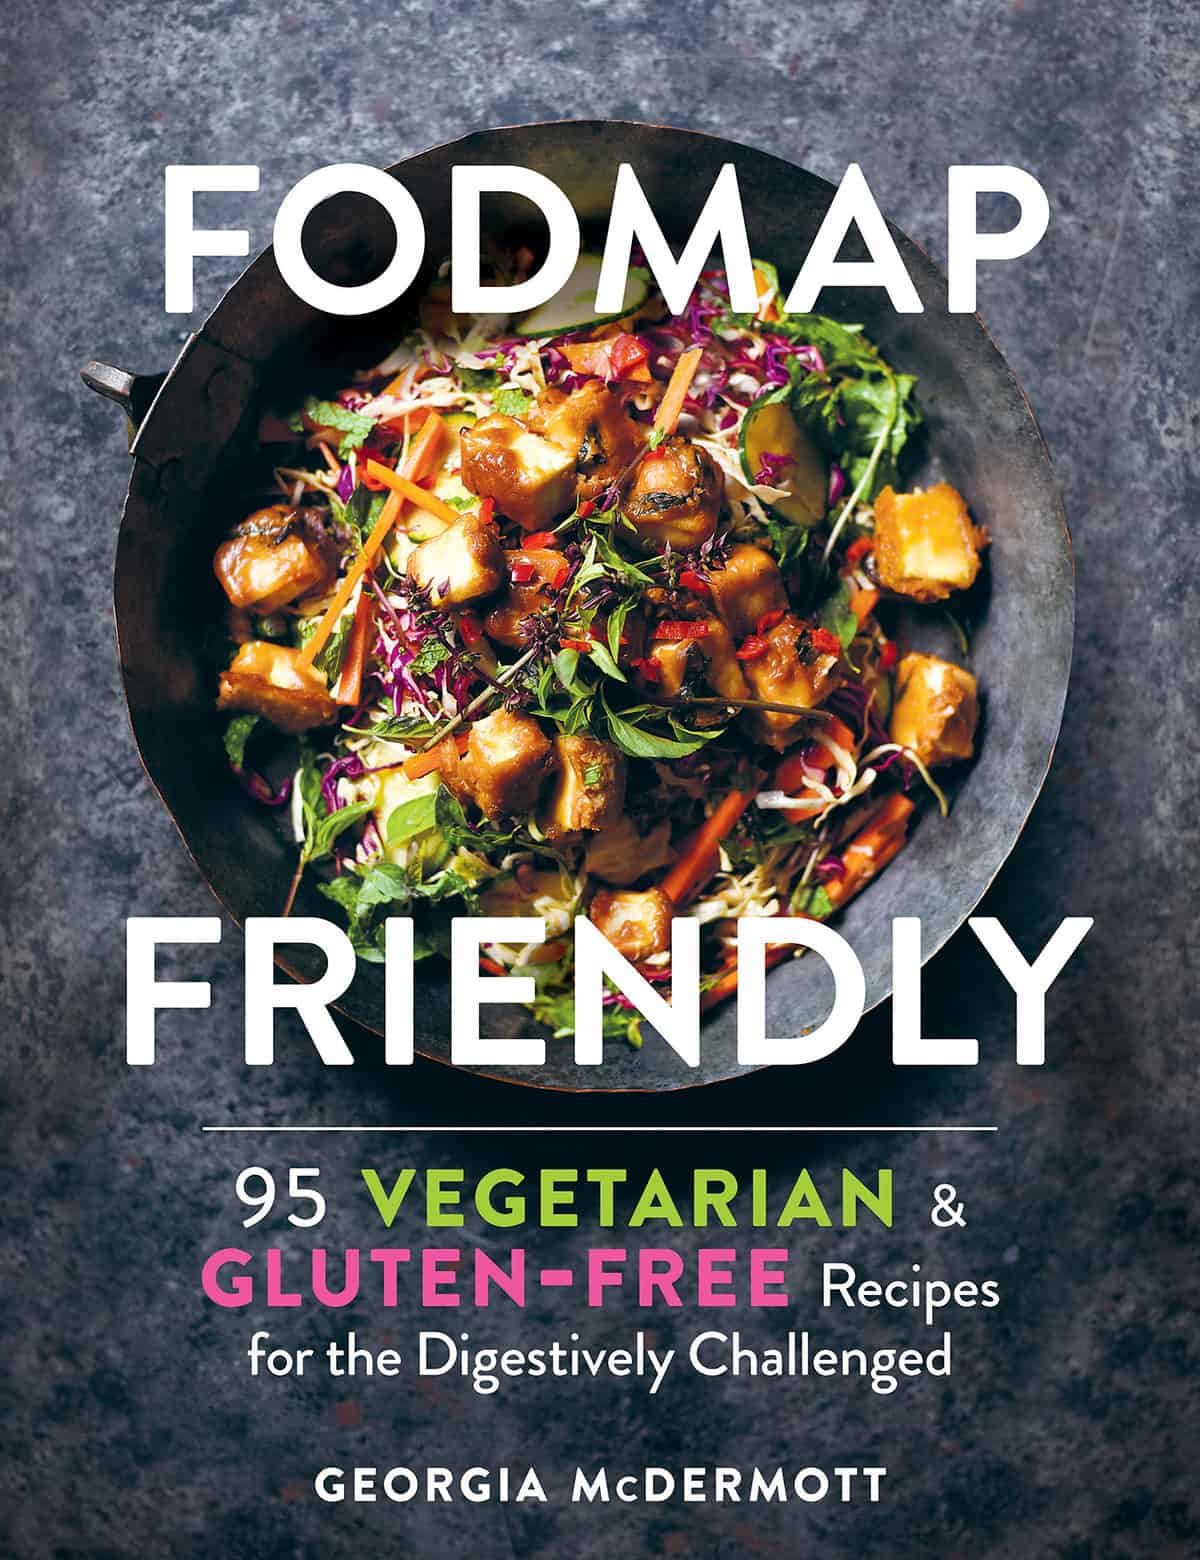 FODMAP Friendly Cookbook from www.georgeats.com